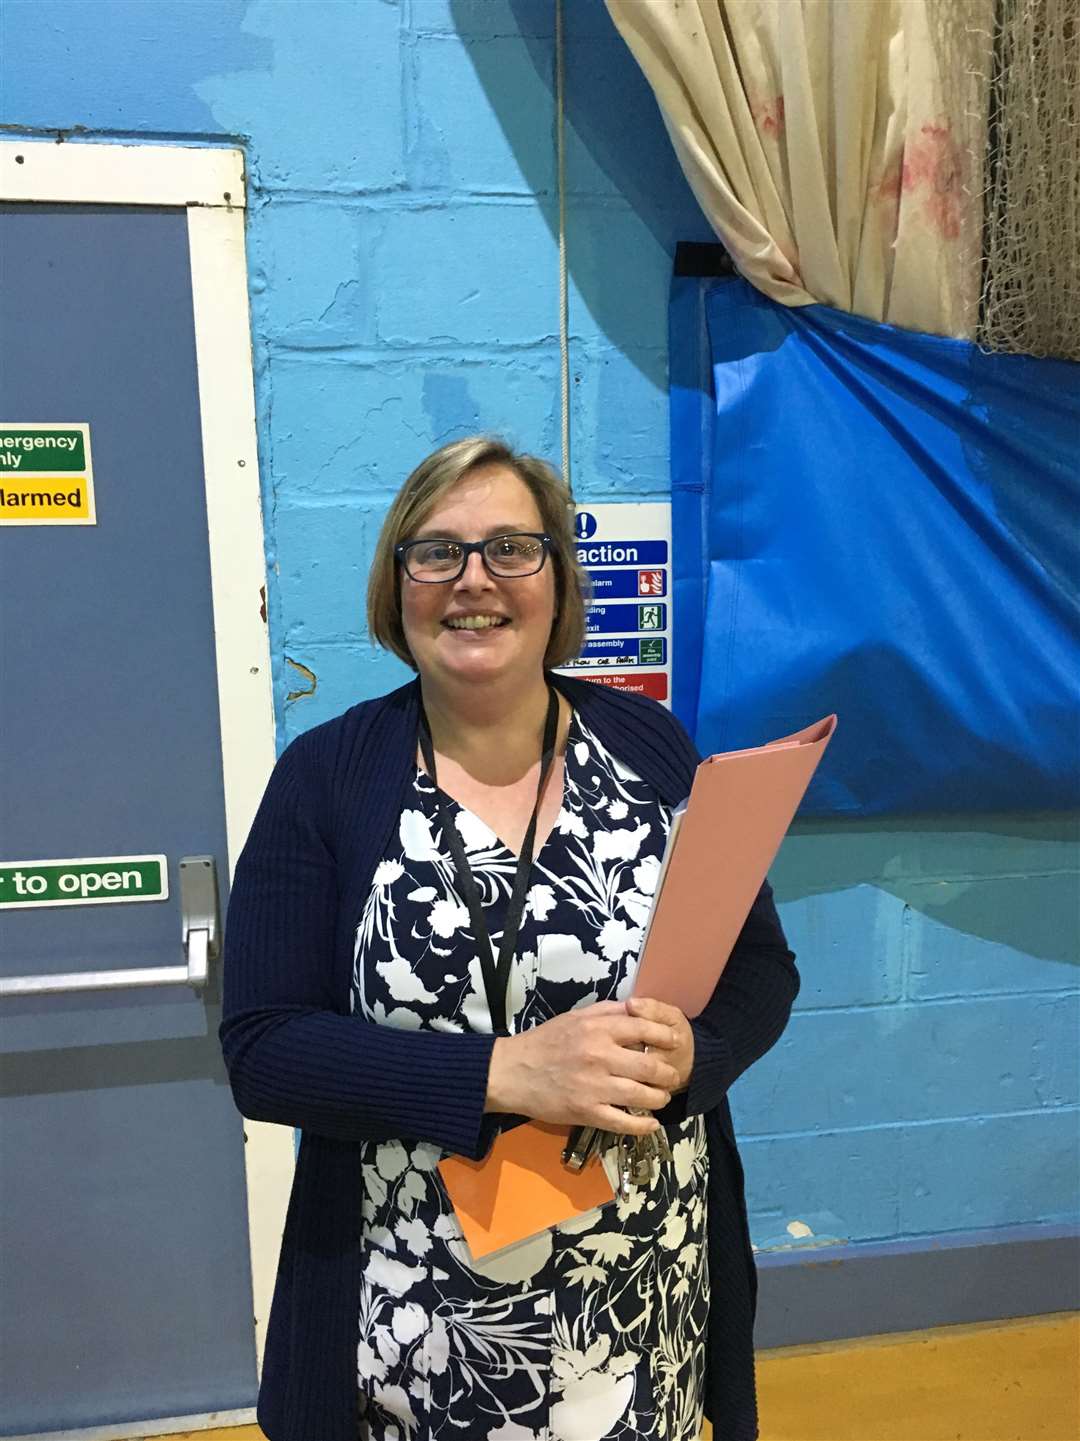 Cllr Sarah Hudson will represent Wateringbury ward at Tonbridge and Malling Borough Council (9592588)